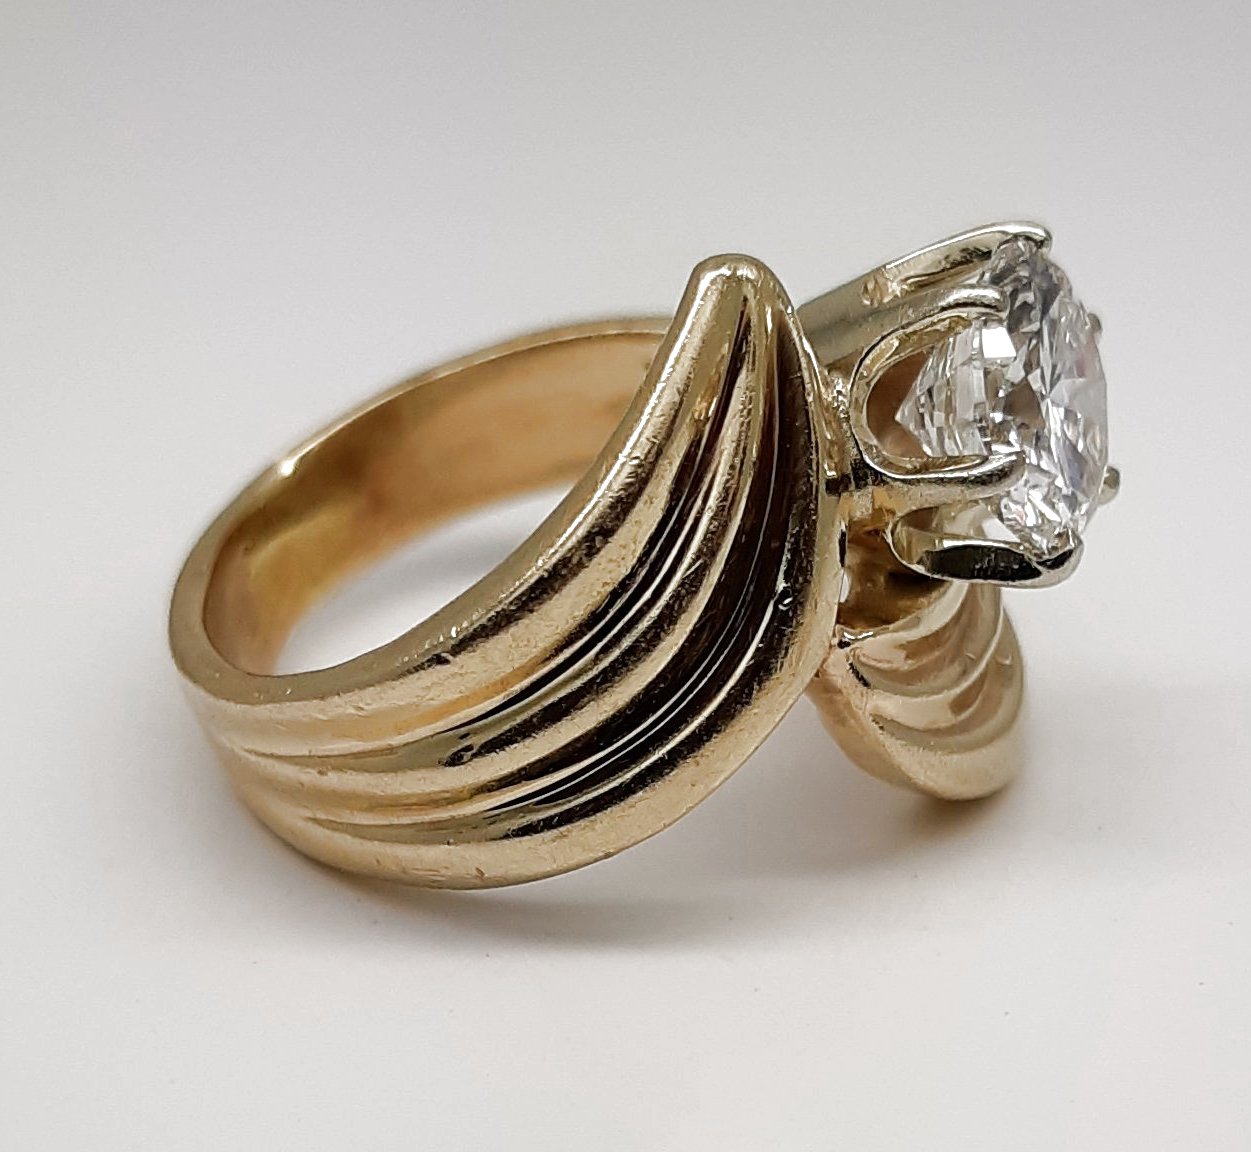 A lady's estate 1.19ct natural diamond solitaire fashion ring, circa 1990s.